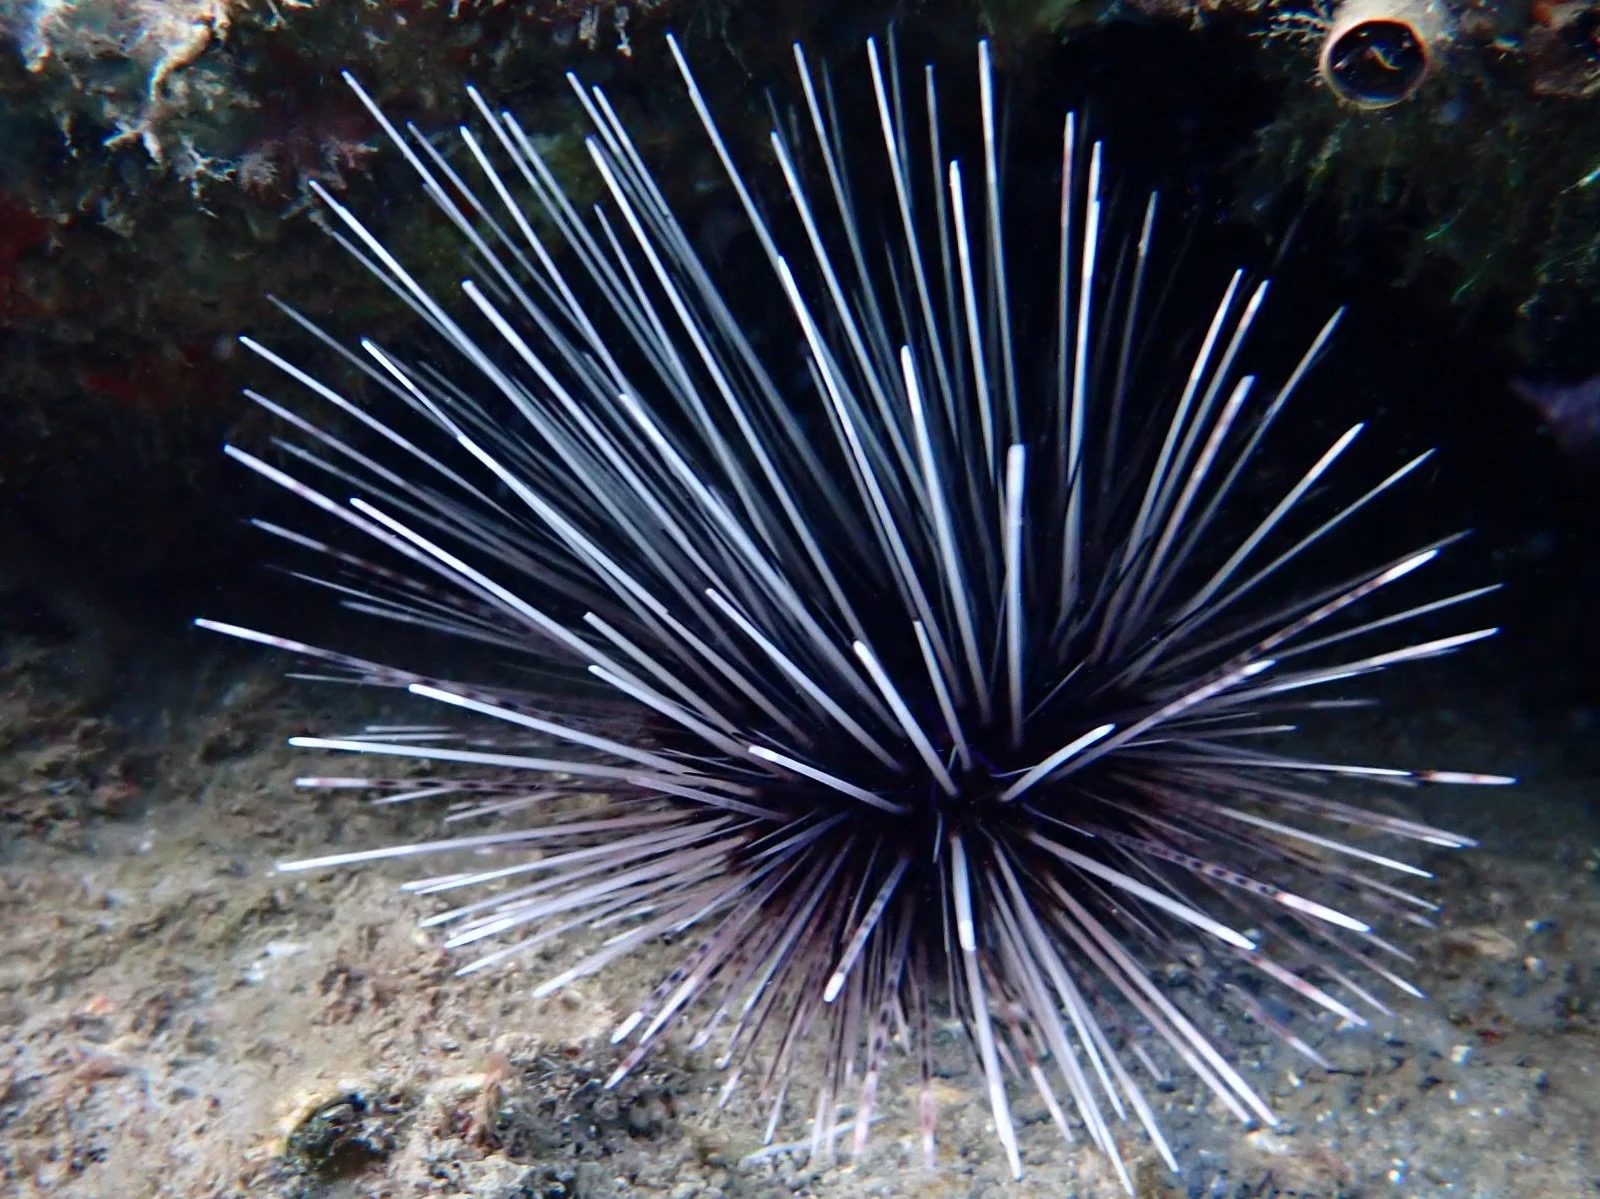 Long-spined sea urchin. PC: Photo Credit: Nik Varley